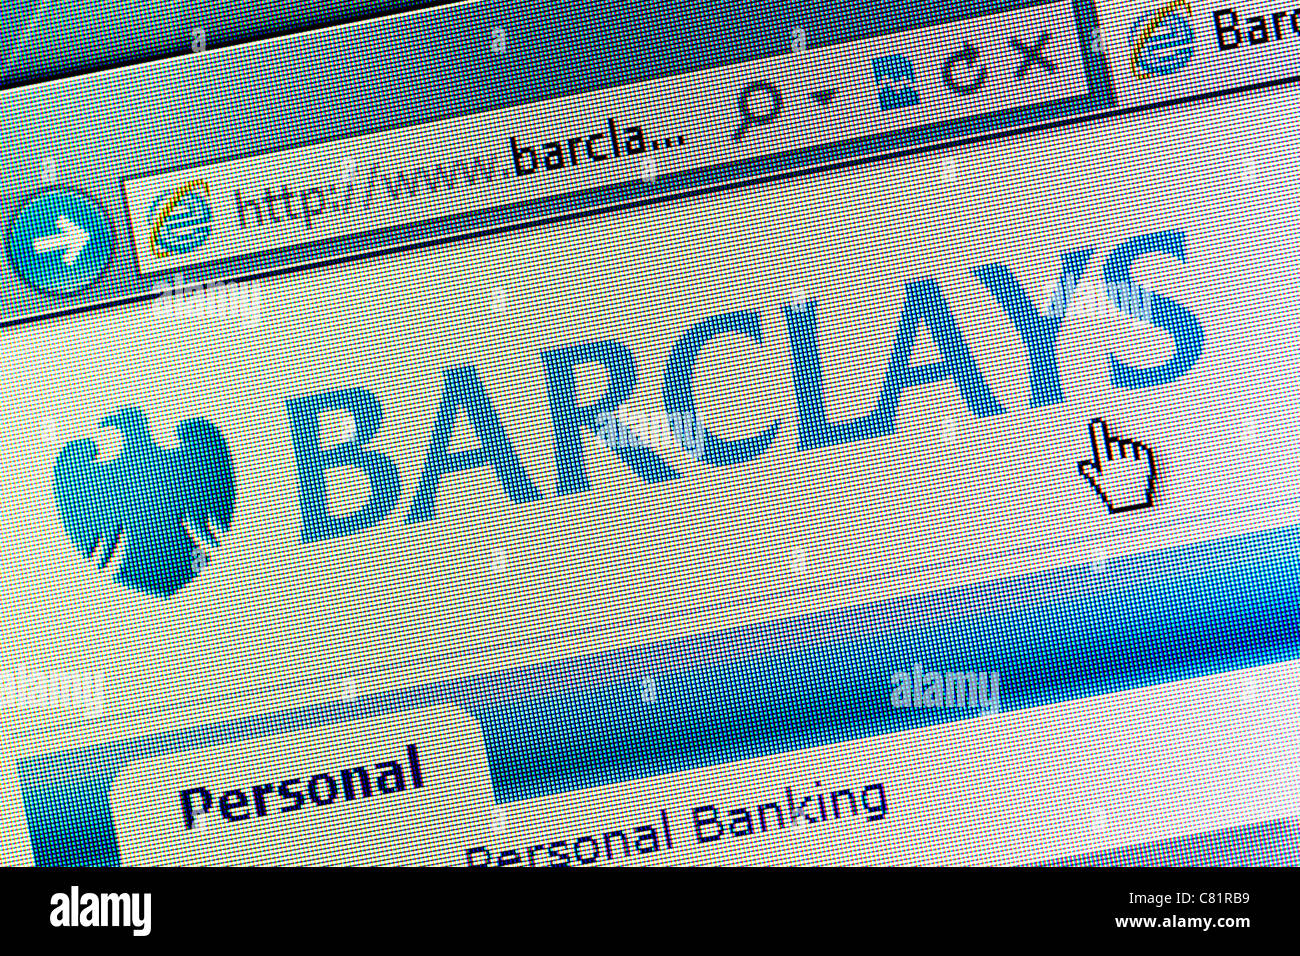 Barclays Bank logo and website close up Stock Photo